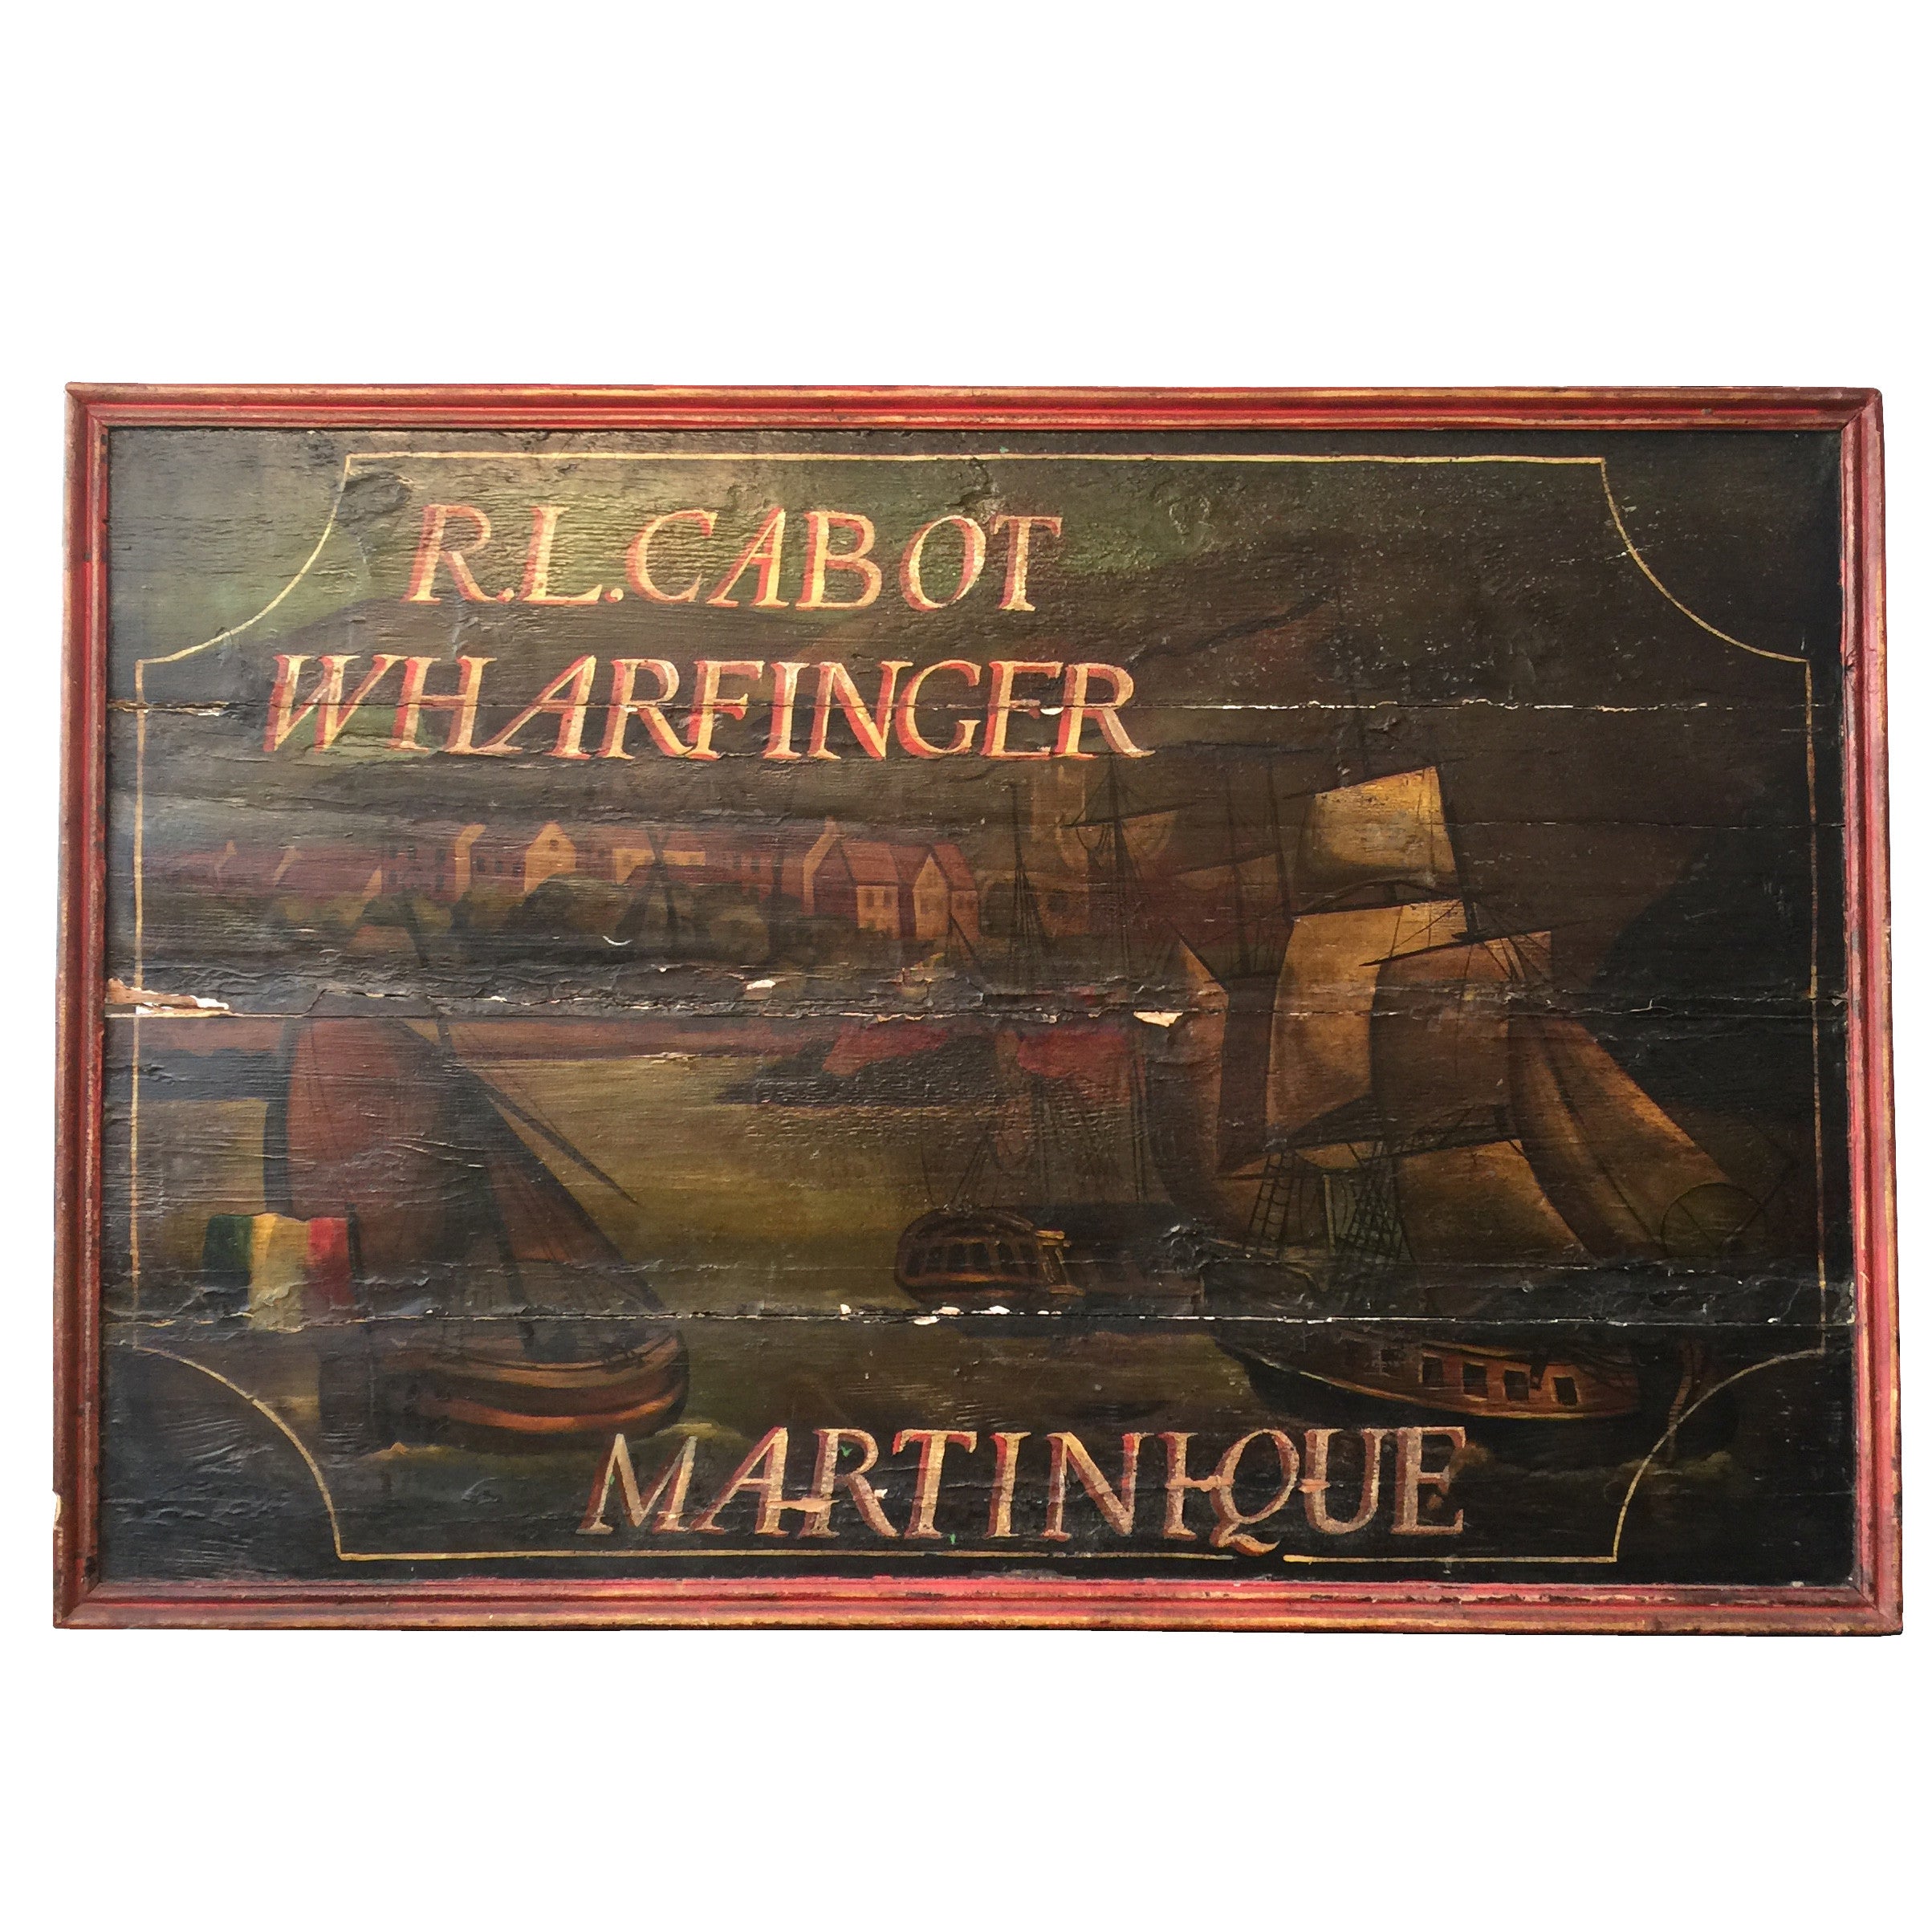 French Antique Pub Sign "R.L. Cabot Wharfinger Martinique" c1910